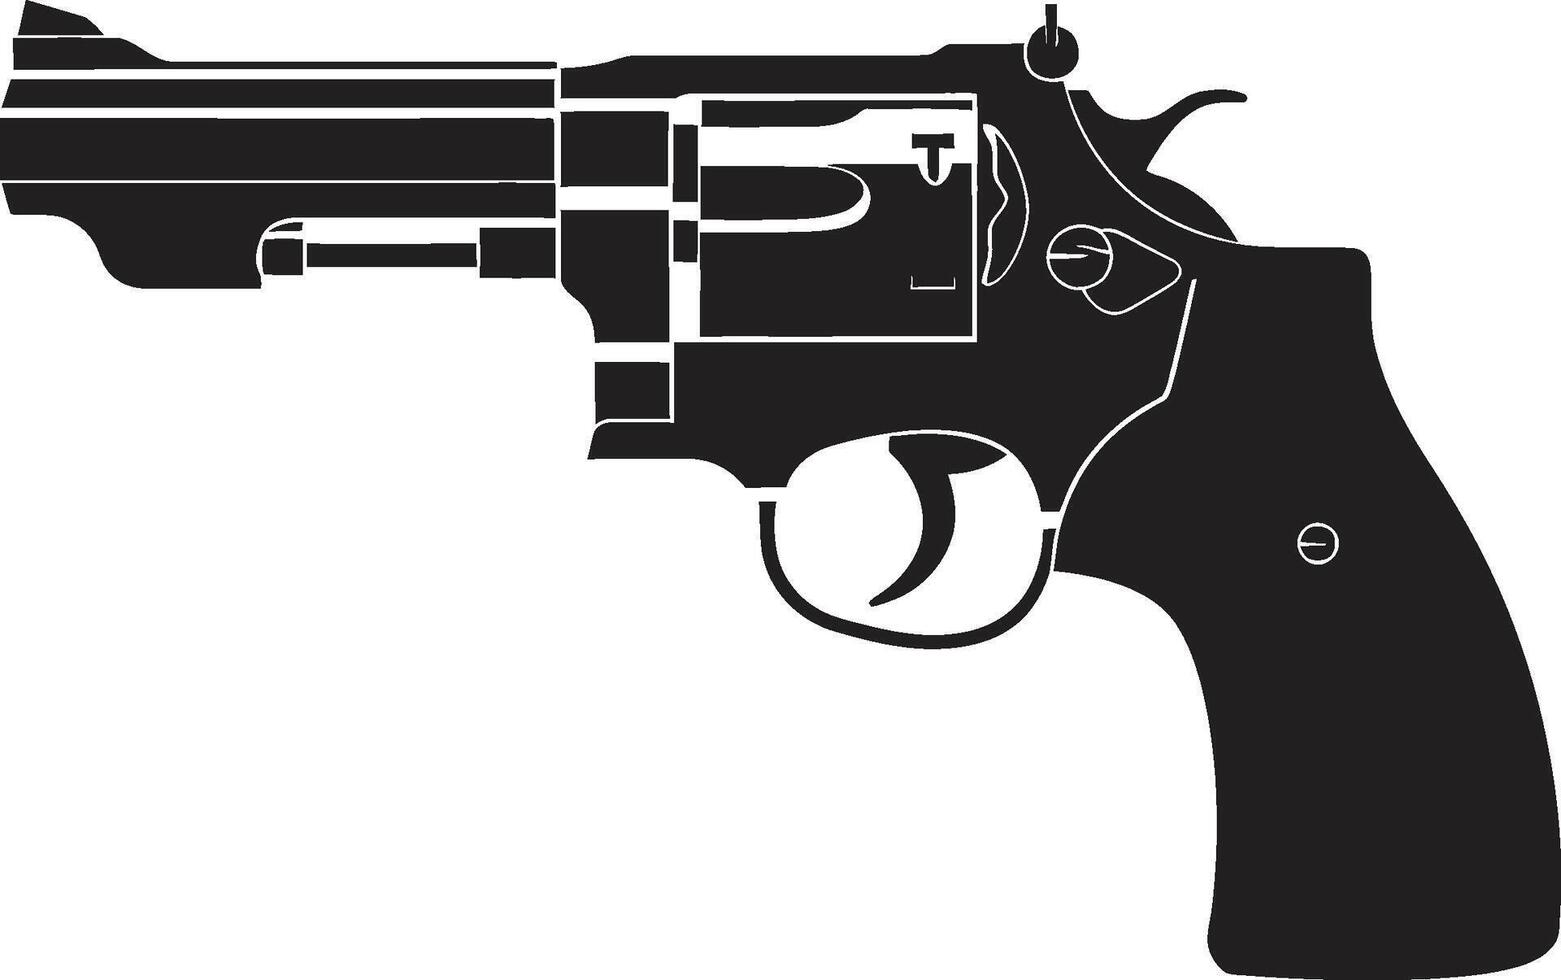 Trendsetting Trigger Badge Modern Revolver Design for Iconic Style Sleek Shooter Insignia Vector Logo for Stylish Firearm Impact